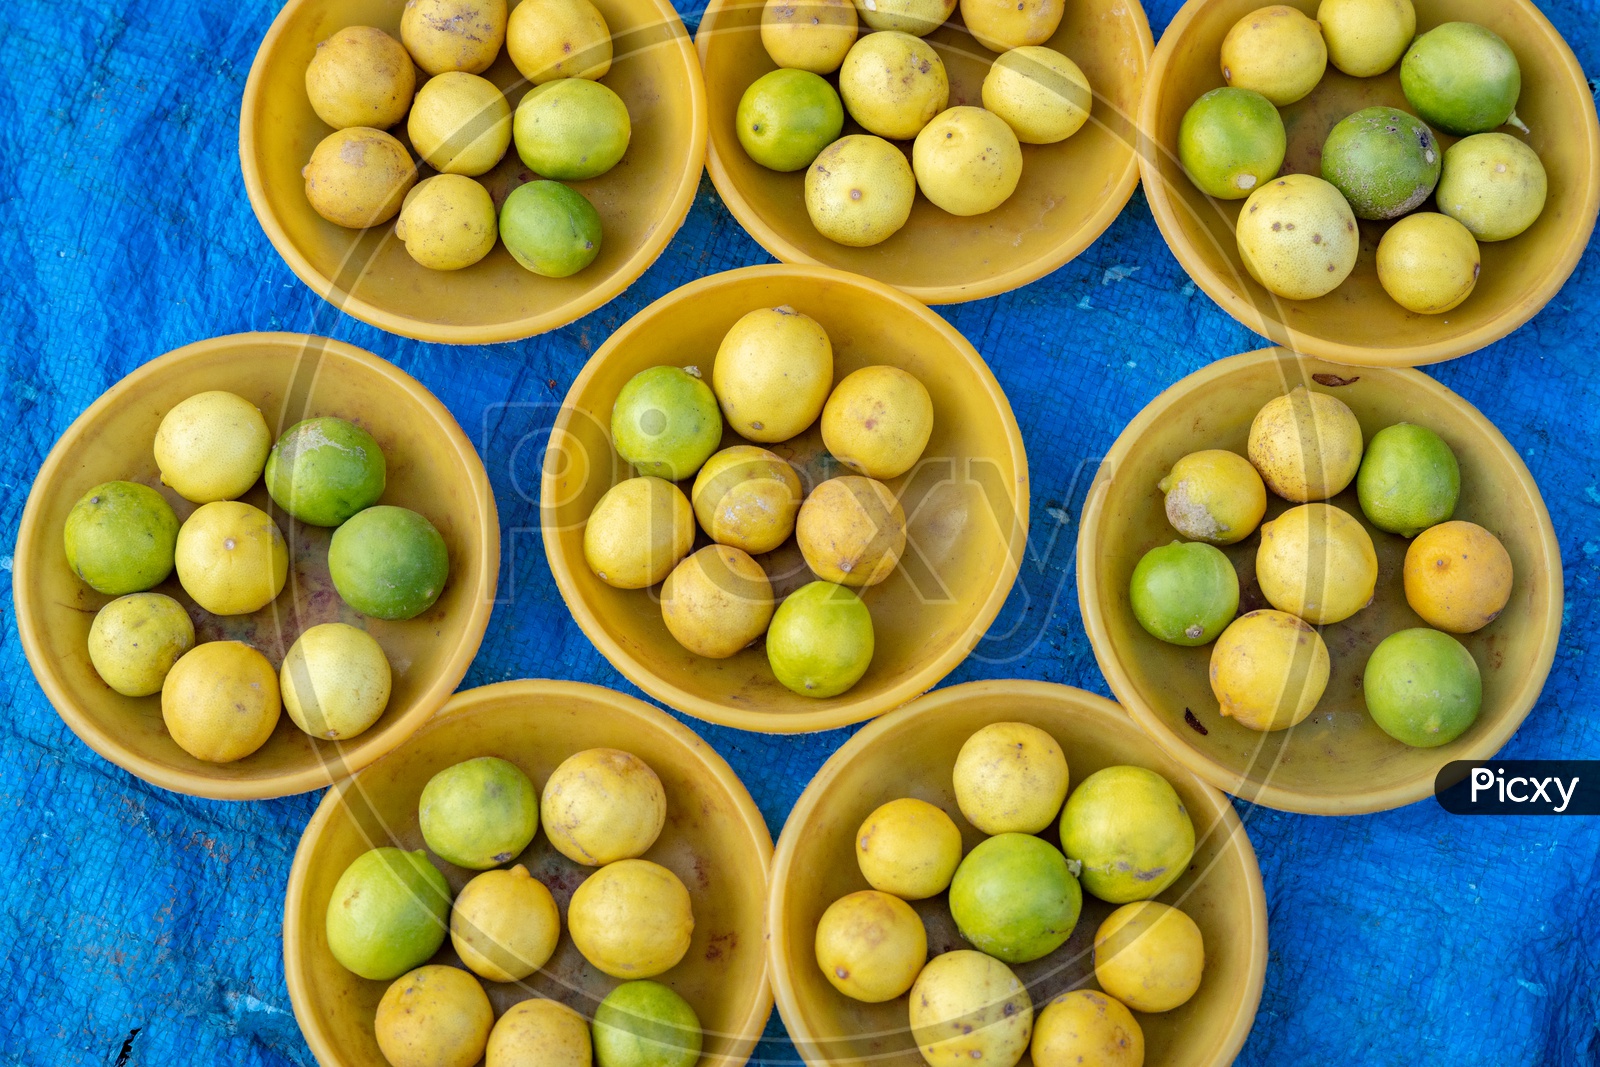 Lemons  in Bowls At a Vegetable Vendor Stall